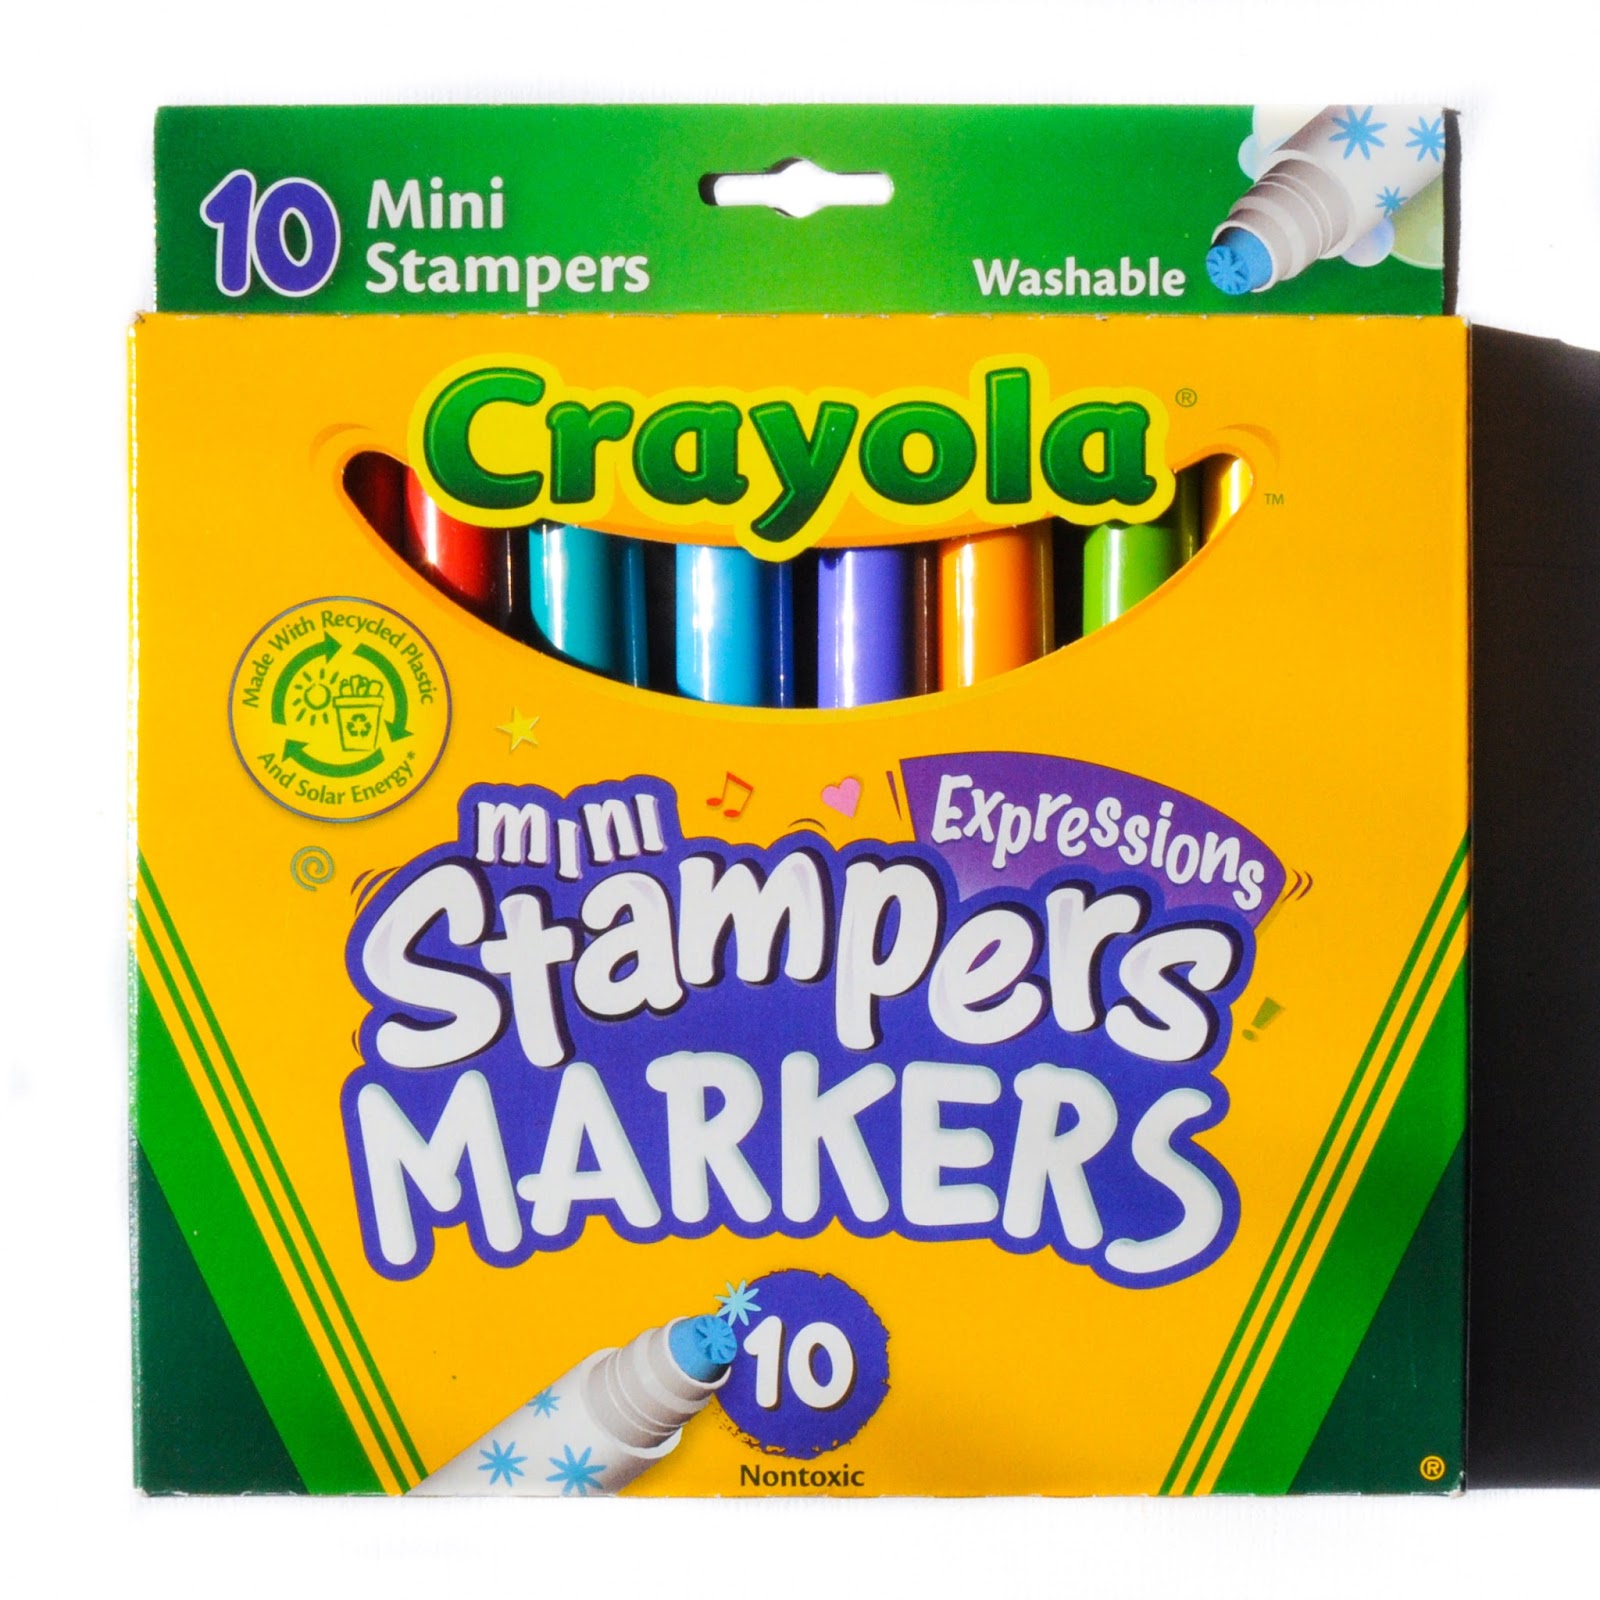 Crayola Emoji Stamp Marker Maker Art Set